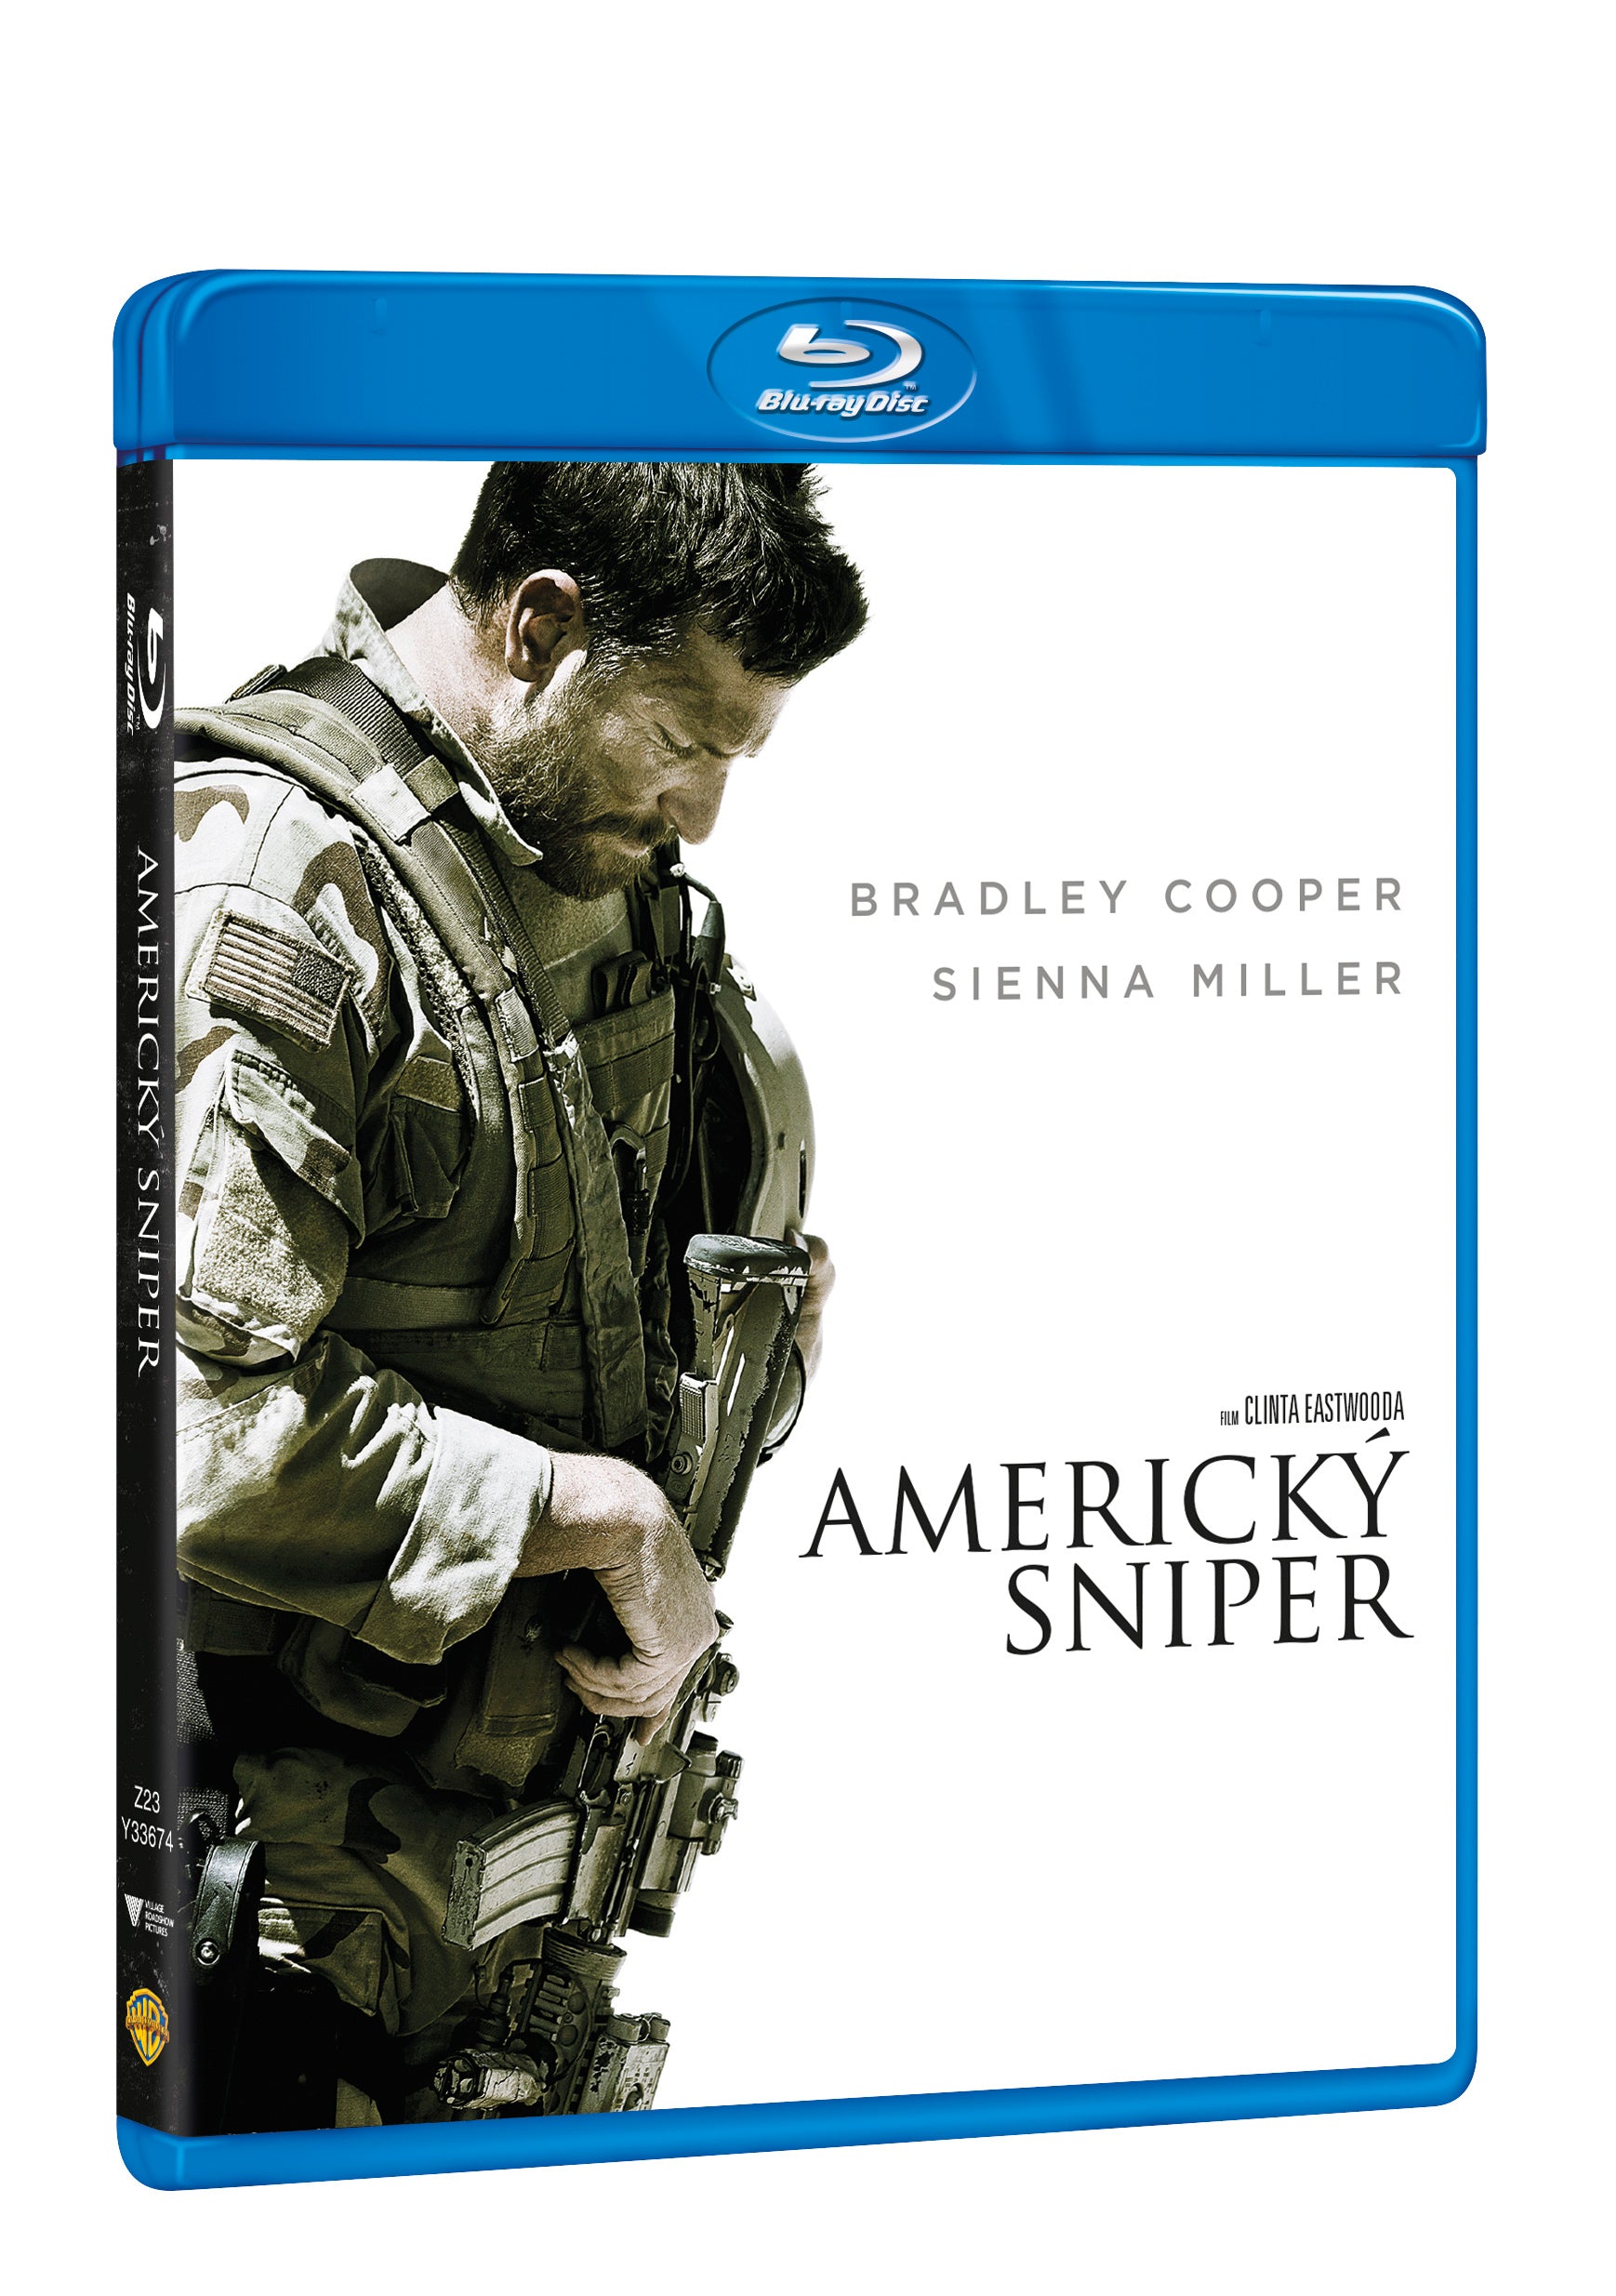 Americky sniper BD / American Sniper - Czech version